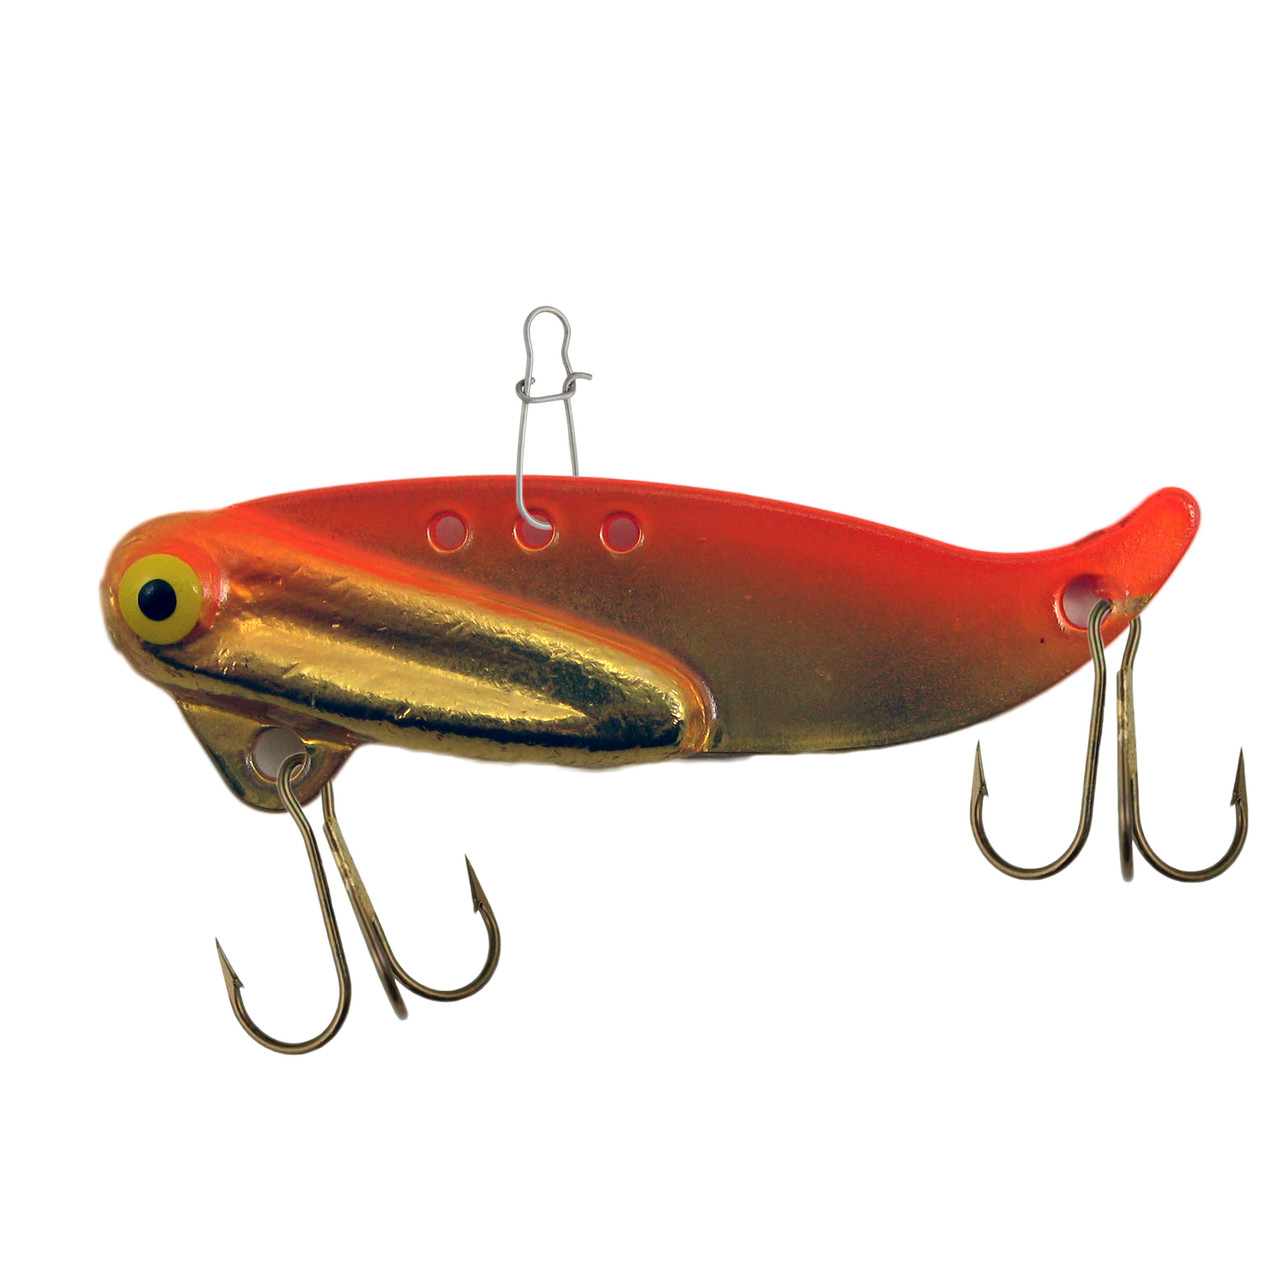 Buy Petbly(TM) Big Size Sinker vibe blade bait Metal Fishing Lures